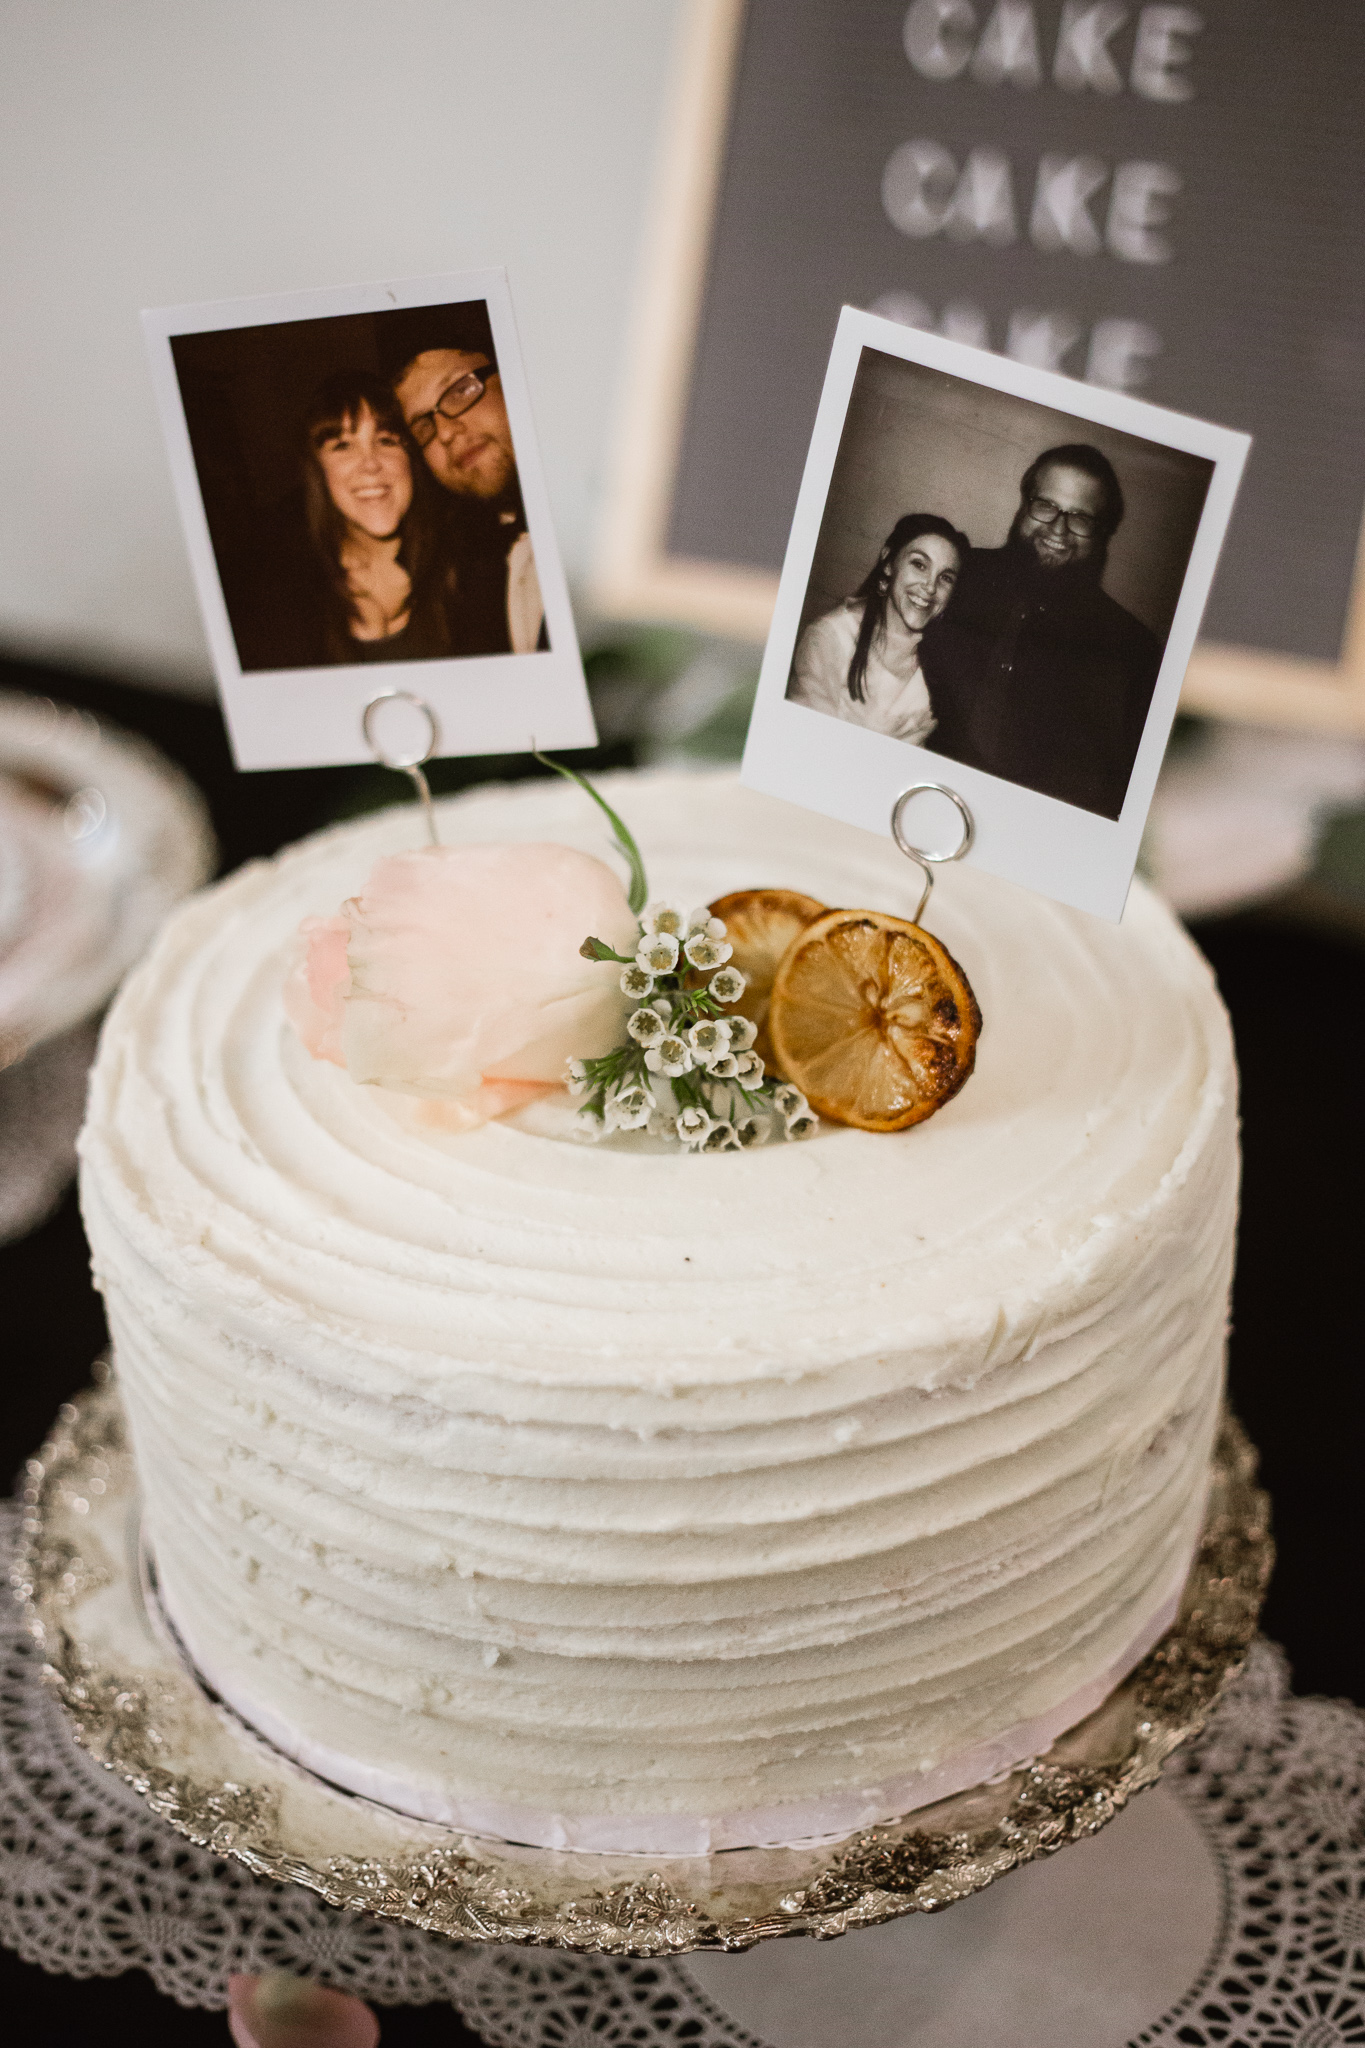 Vintage Polaroid wedding cake topper on top of orange cream cake by Bear and the Honey Phoenix.